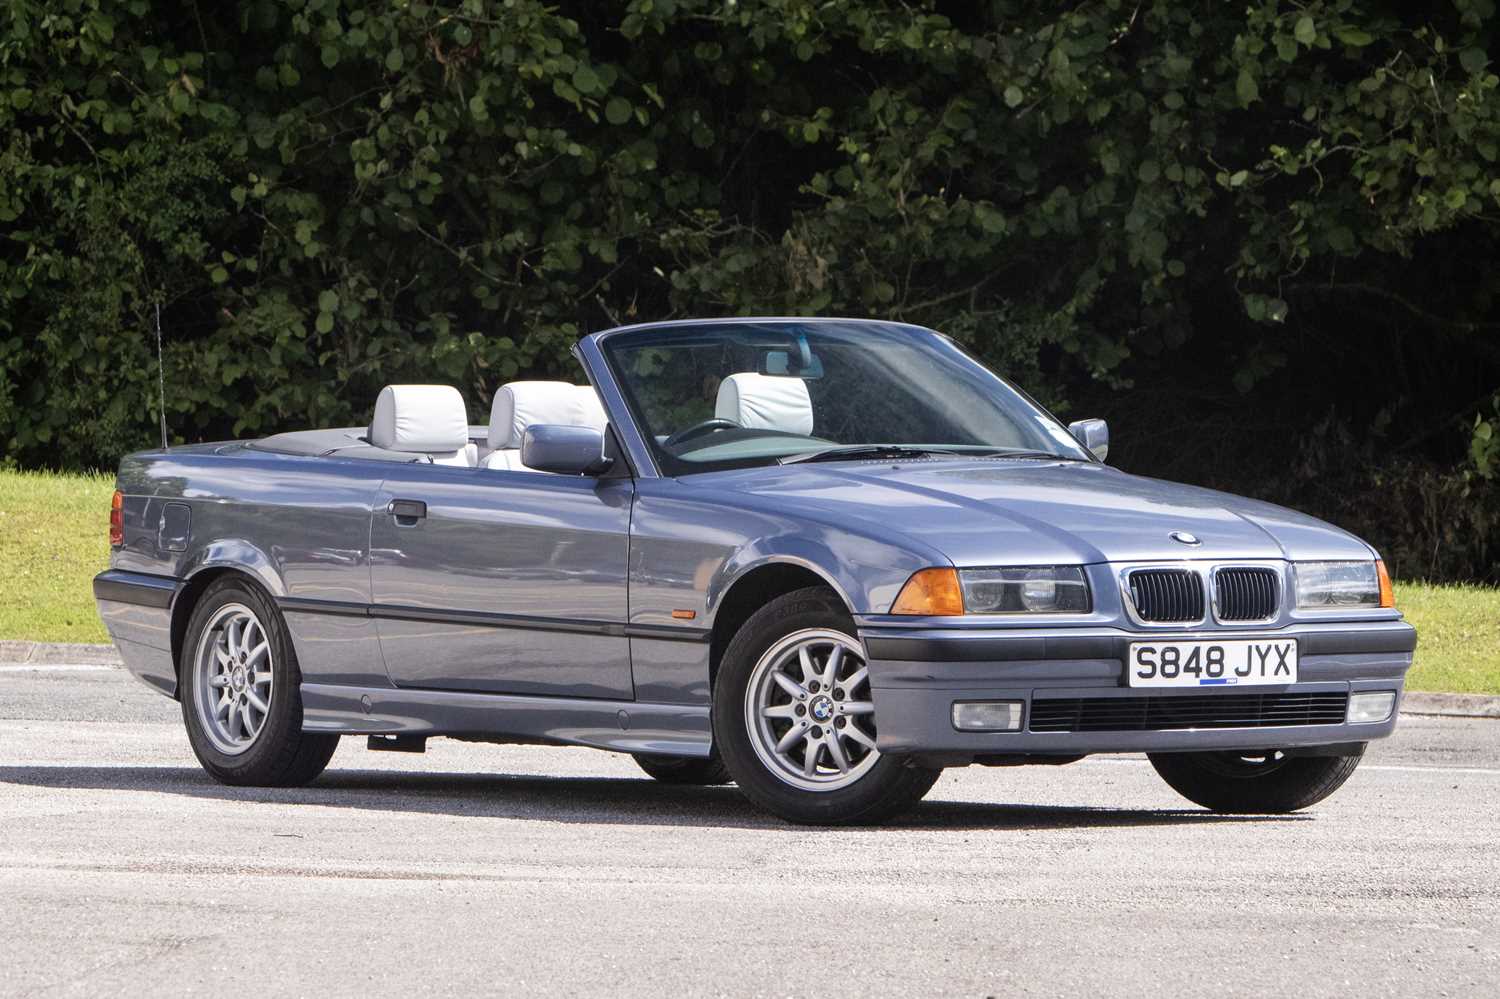 Lot 44 - 1999 BMW 323i Convertible